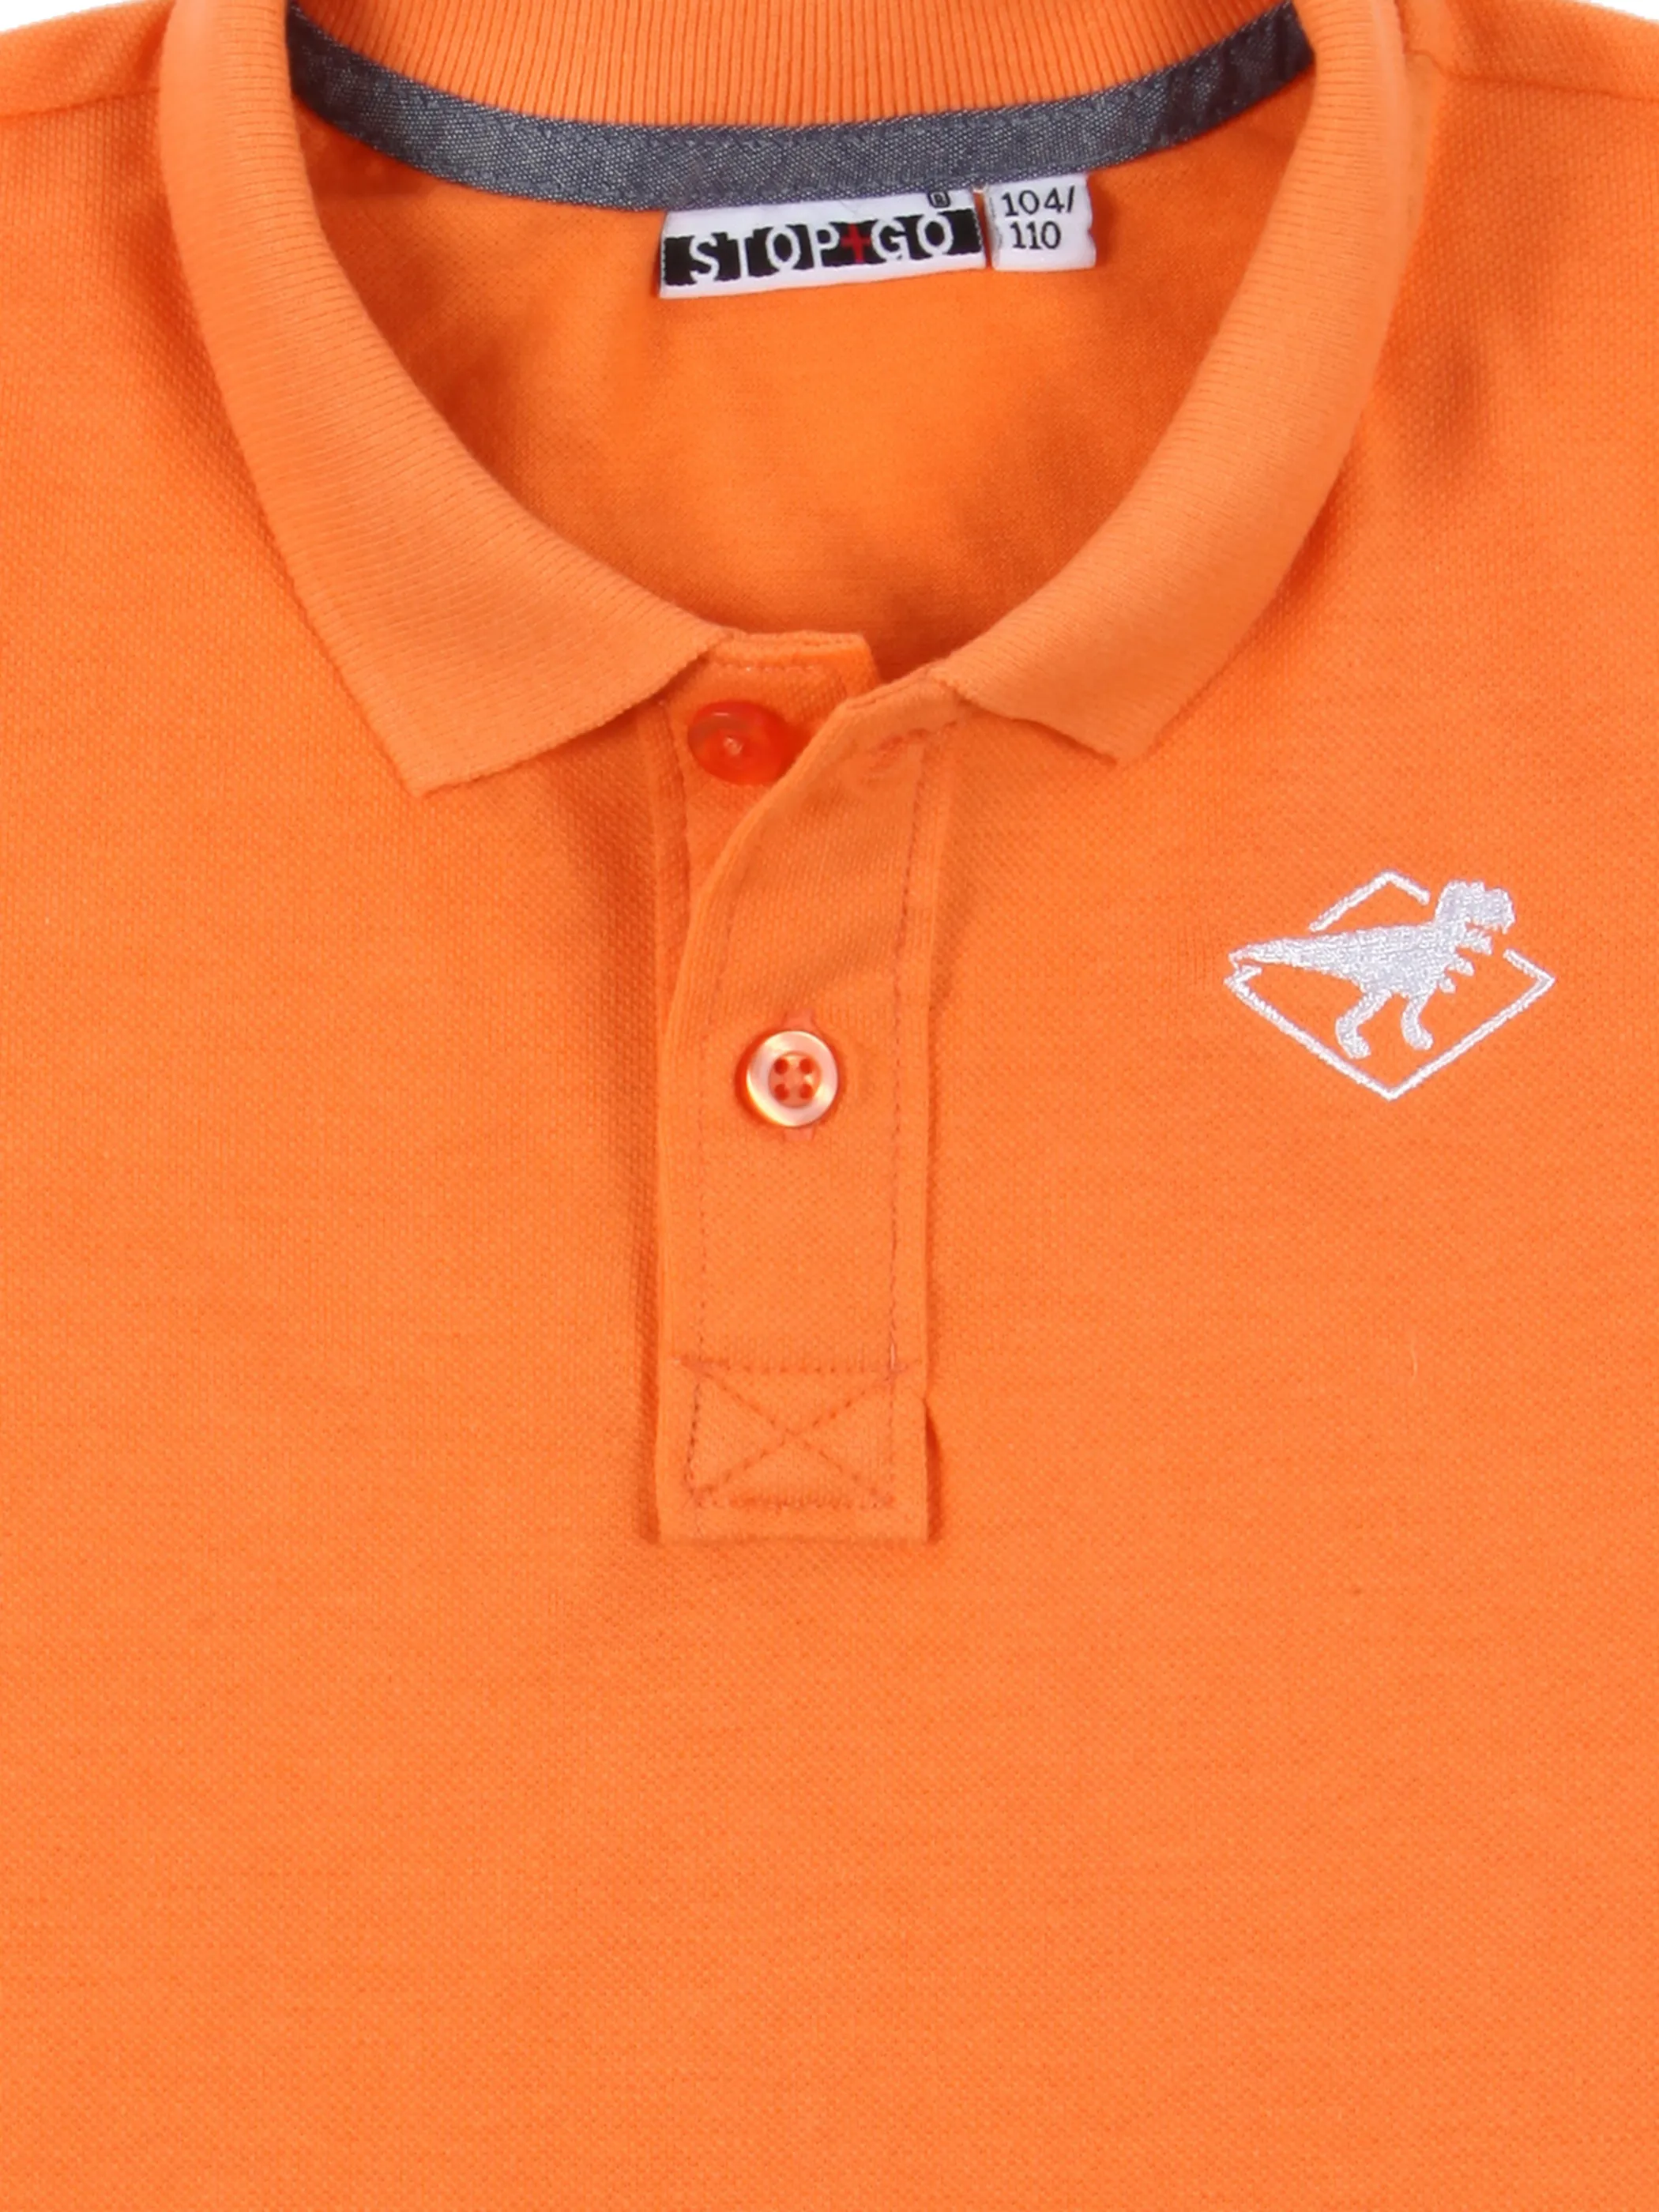 Stop + Go MB Poloshirt 1/4 Arm in orange Orange 851600 ORANGE 3